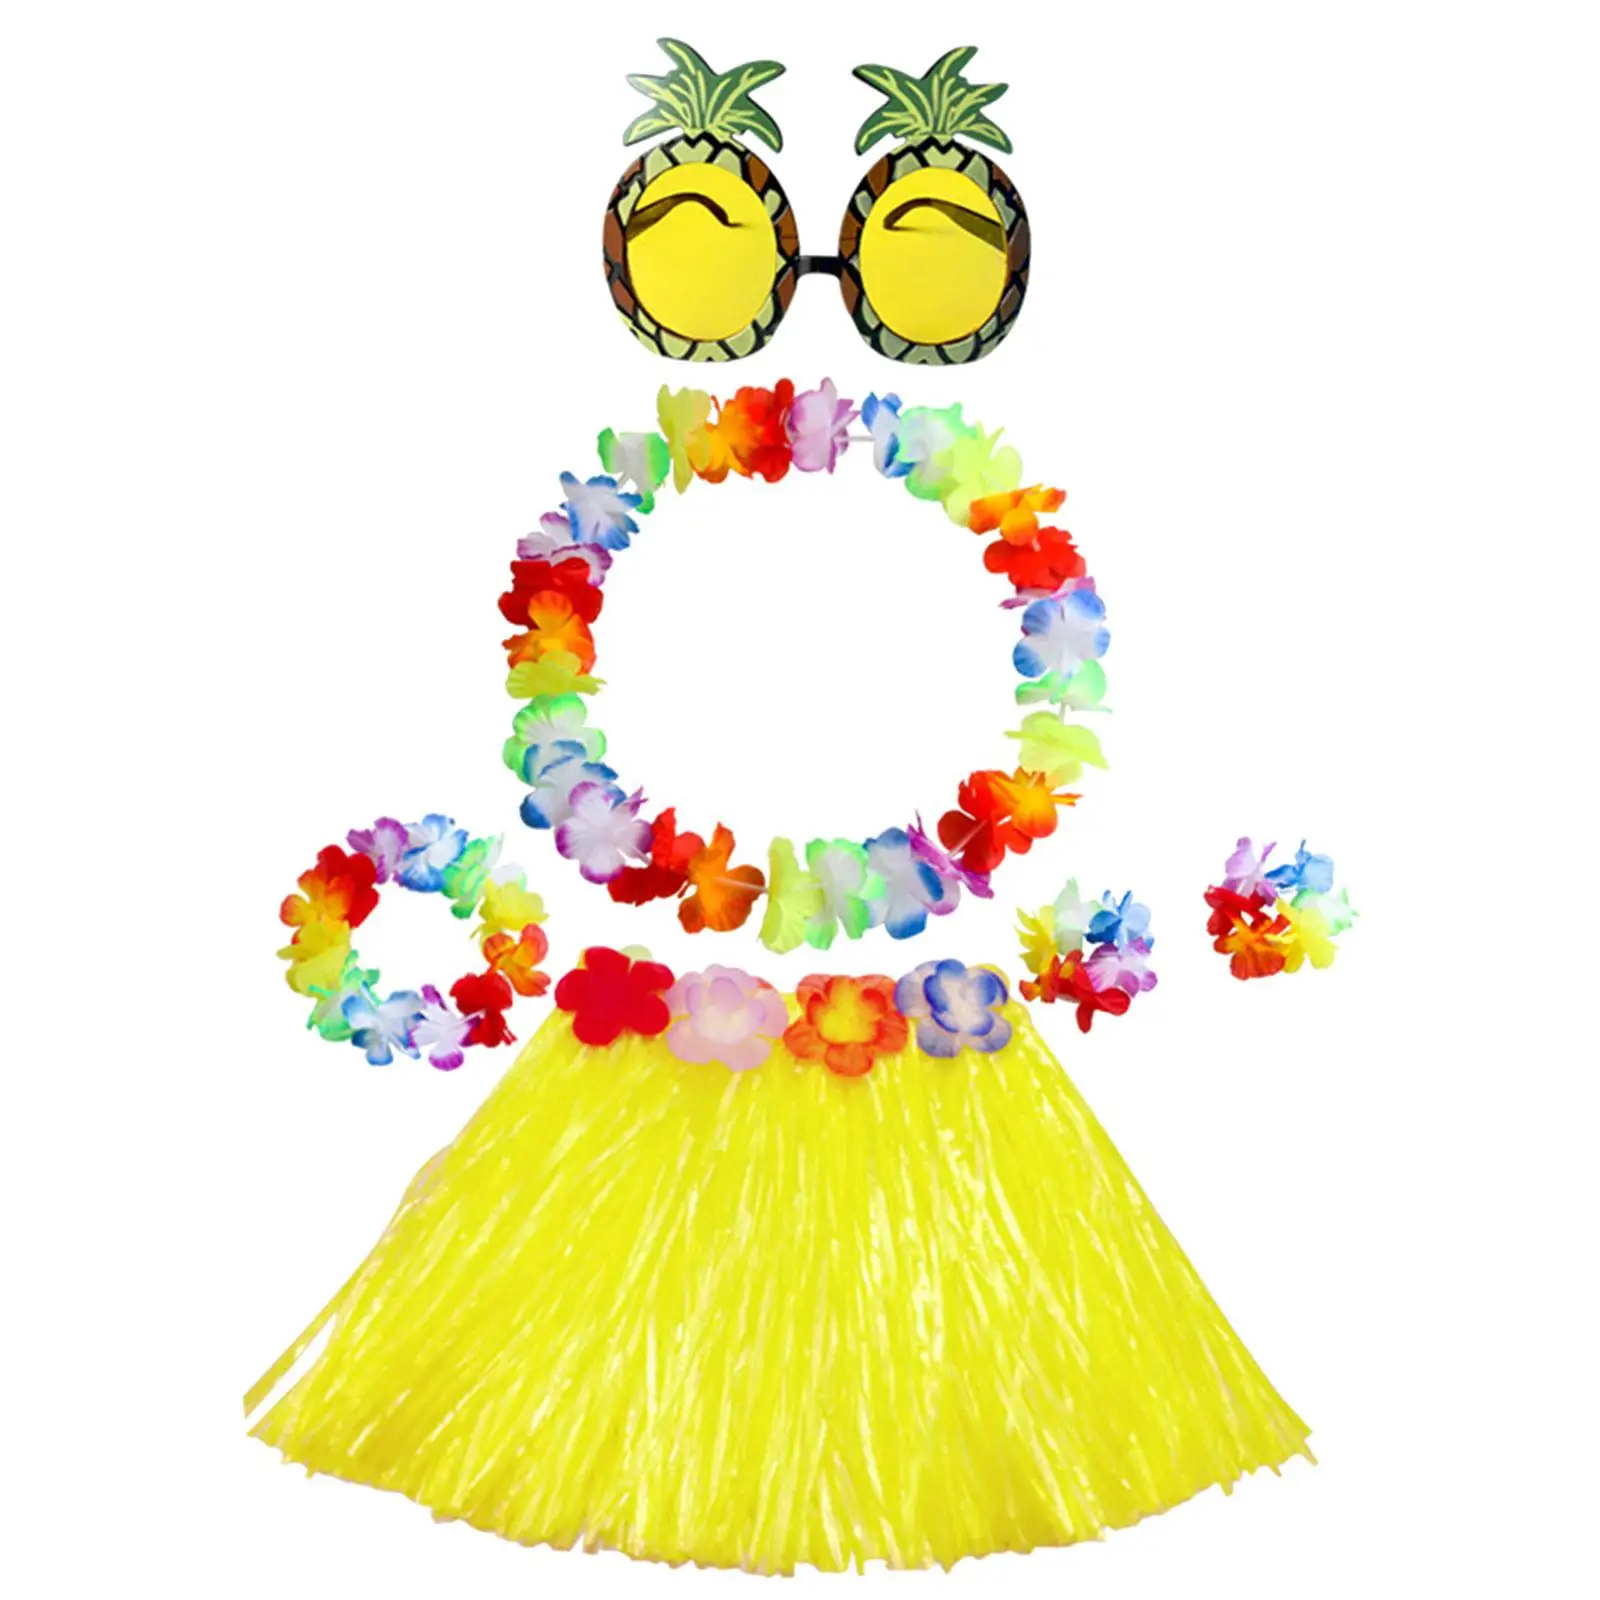 Hawaiian Grass Skirt with with Flower Wreath 30cm Short Skirt Pineapple Glasses for Summer Beach Birthday Decorations Supplies